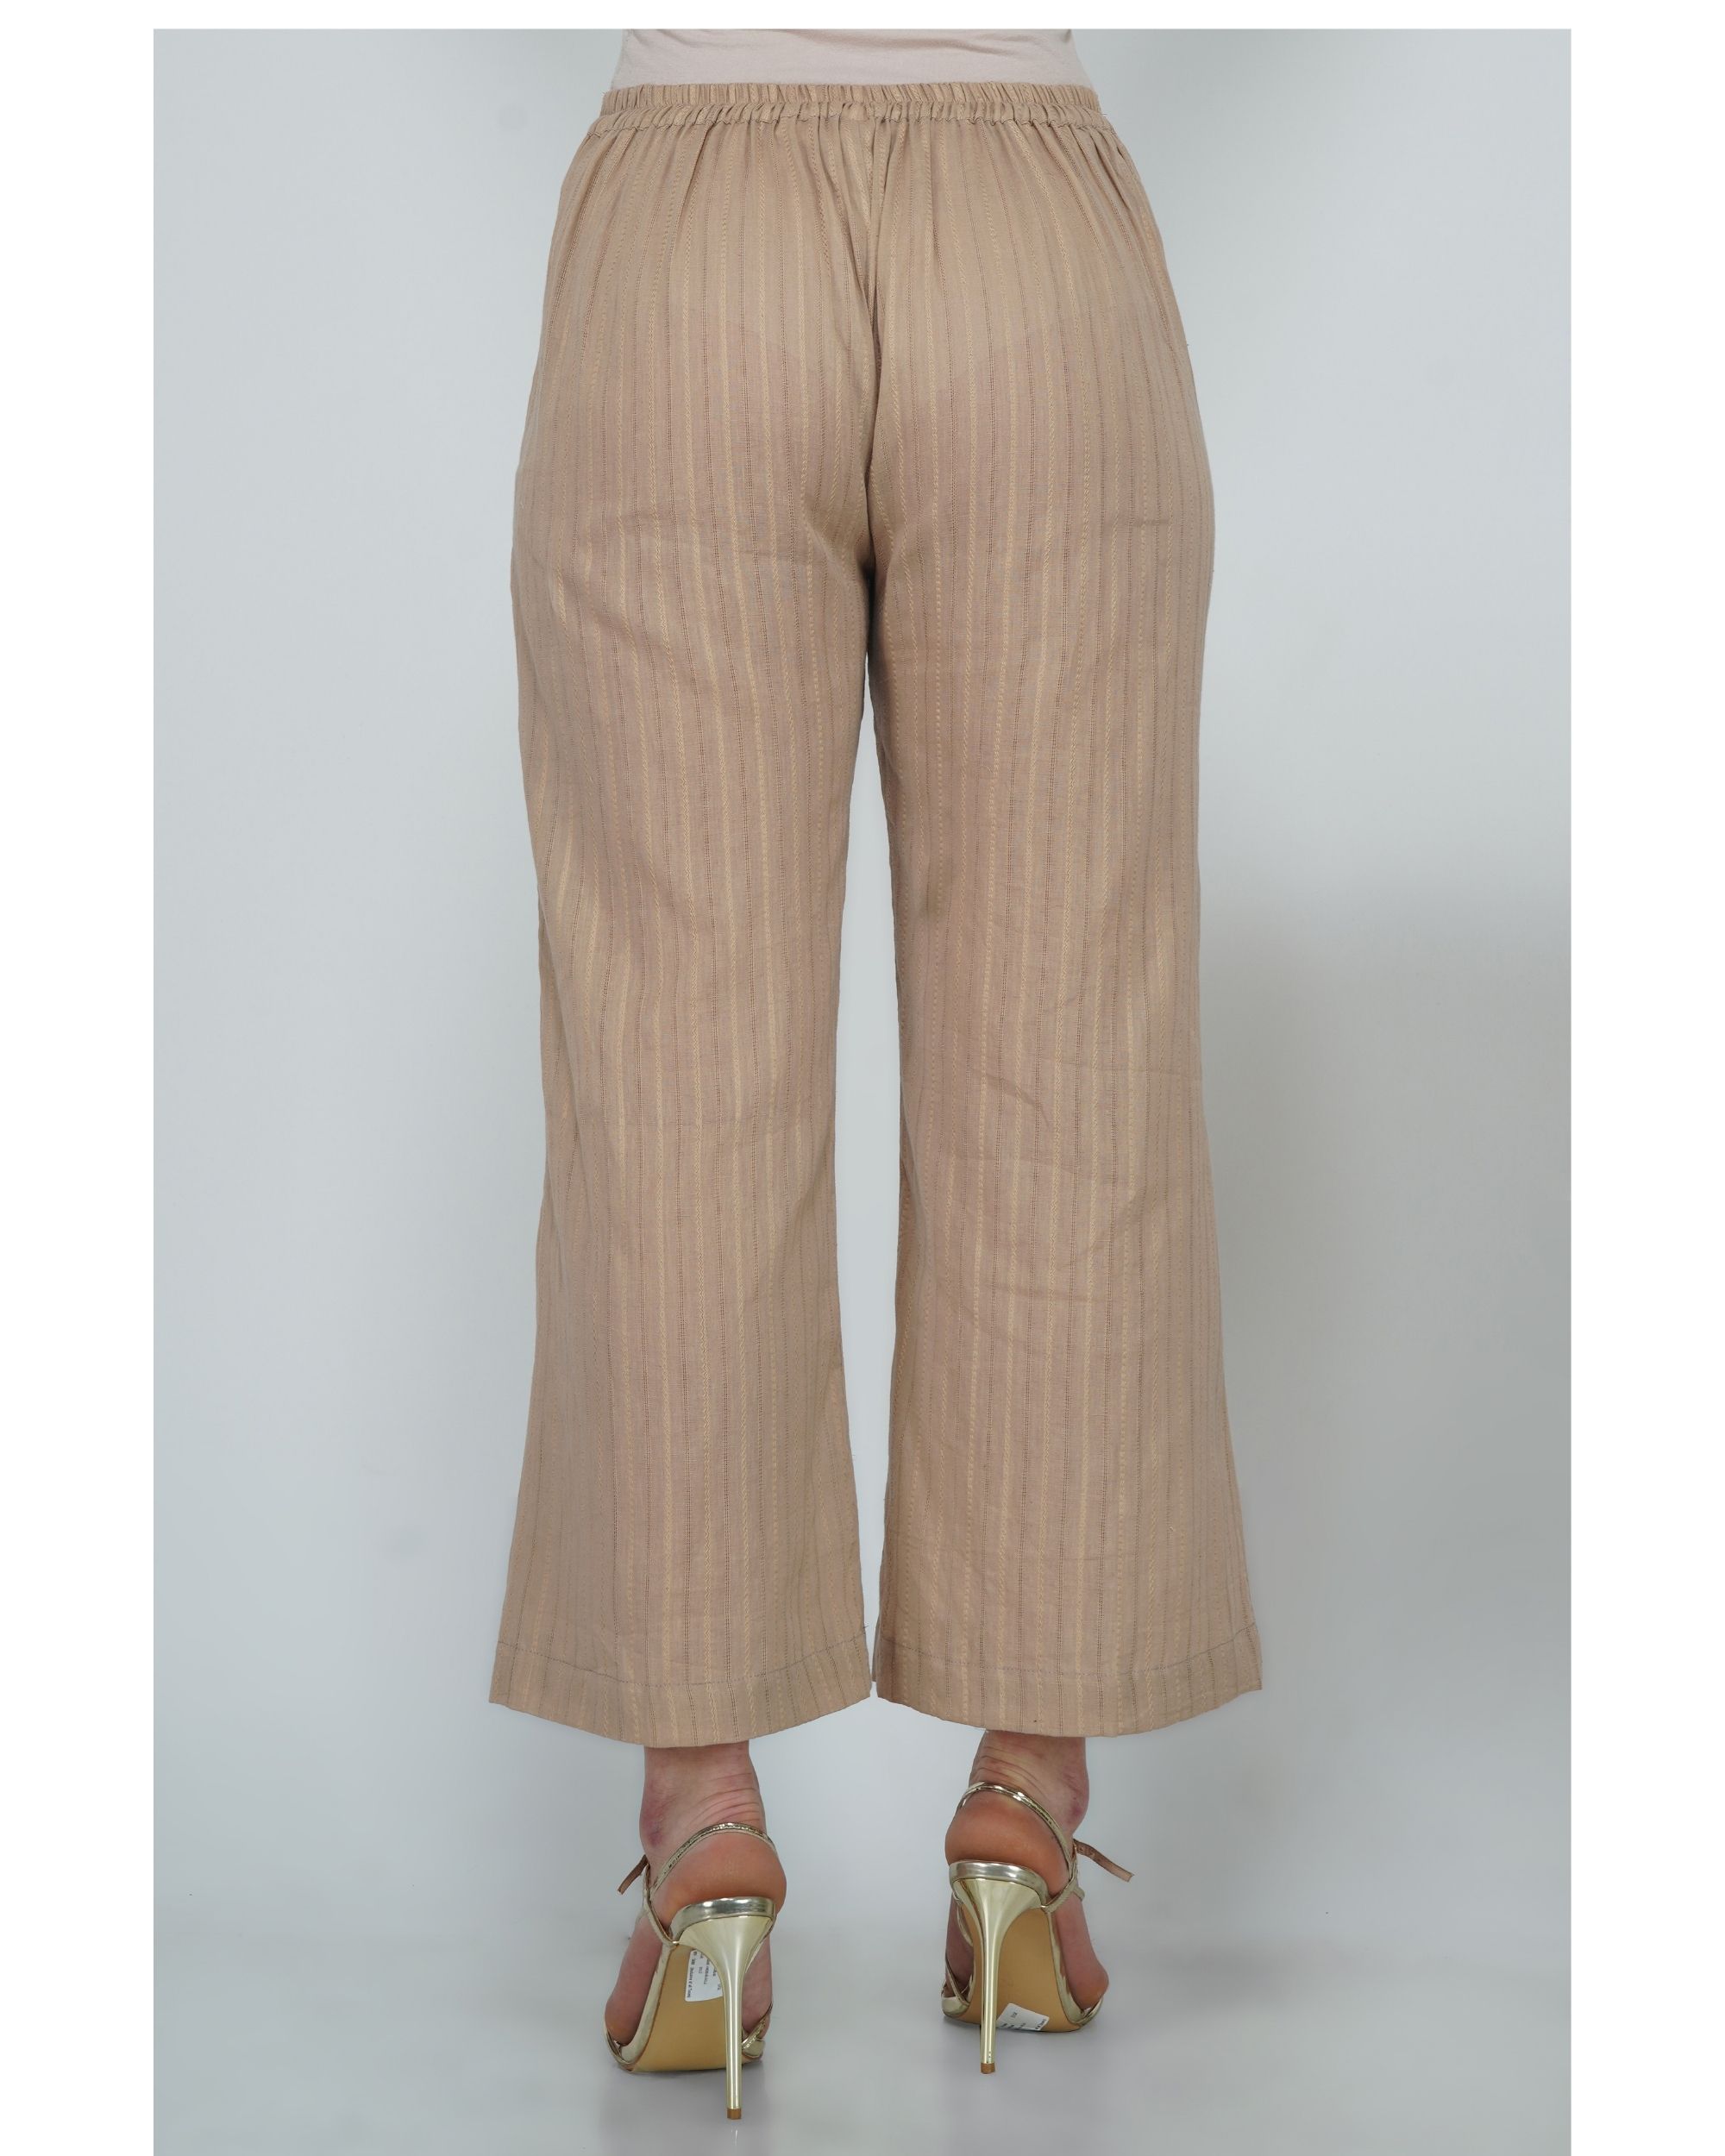 Champagne striped leno cotton pants by Vintage Loom | The Secret Label